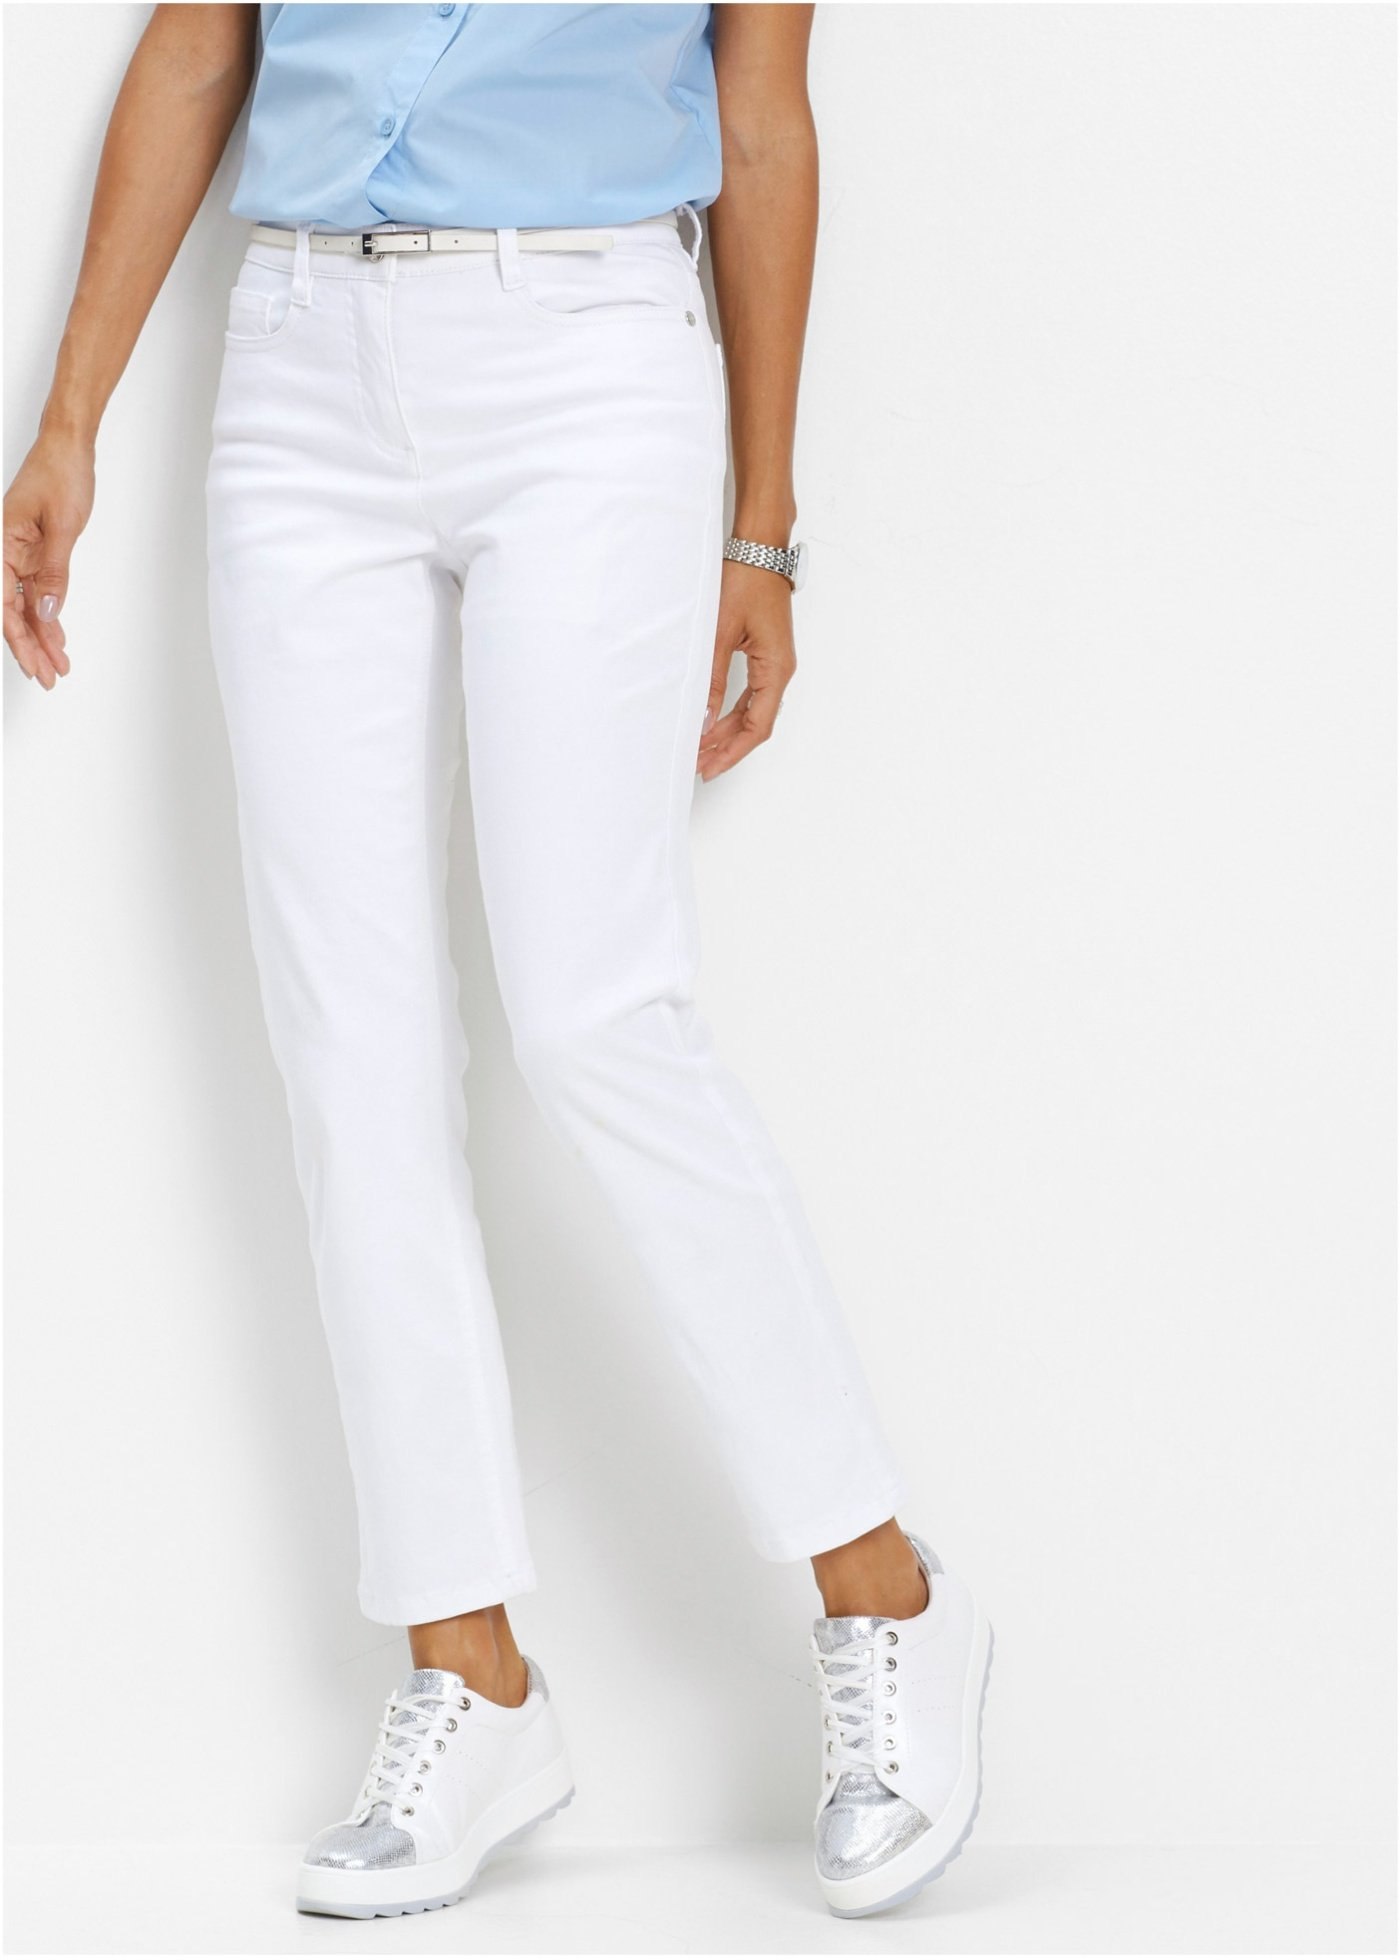 Валберис белые брюки. Валберис белые брюки летние женские. Белые штаны женские. Белые джинсы женские. Белые летние брюки женские.